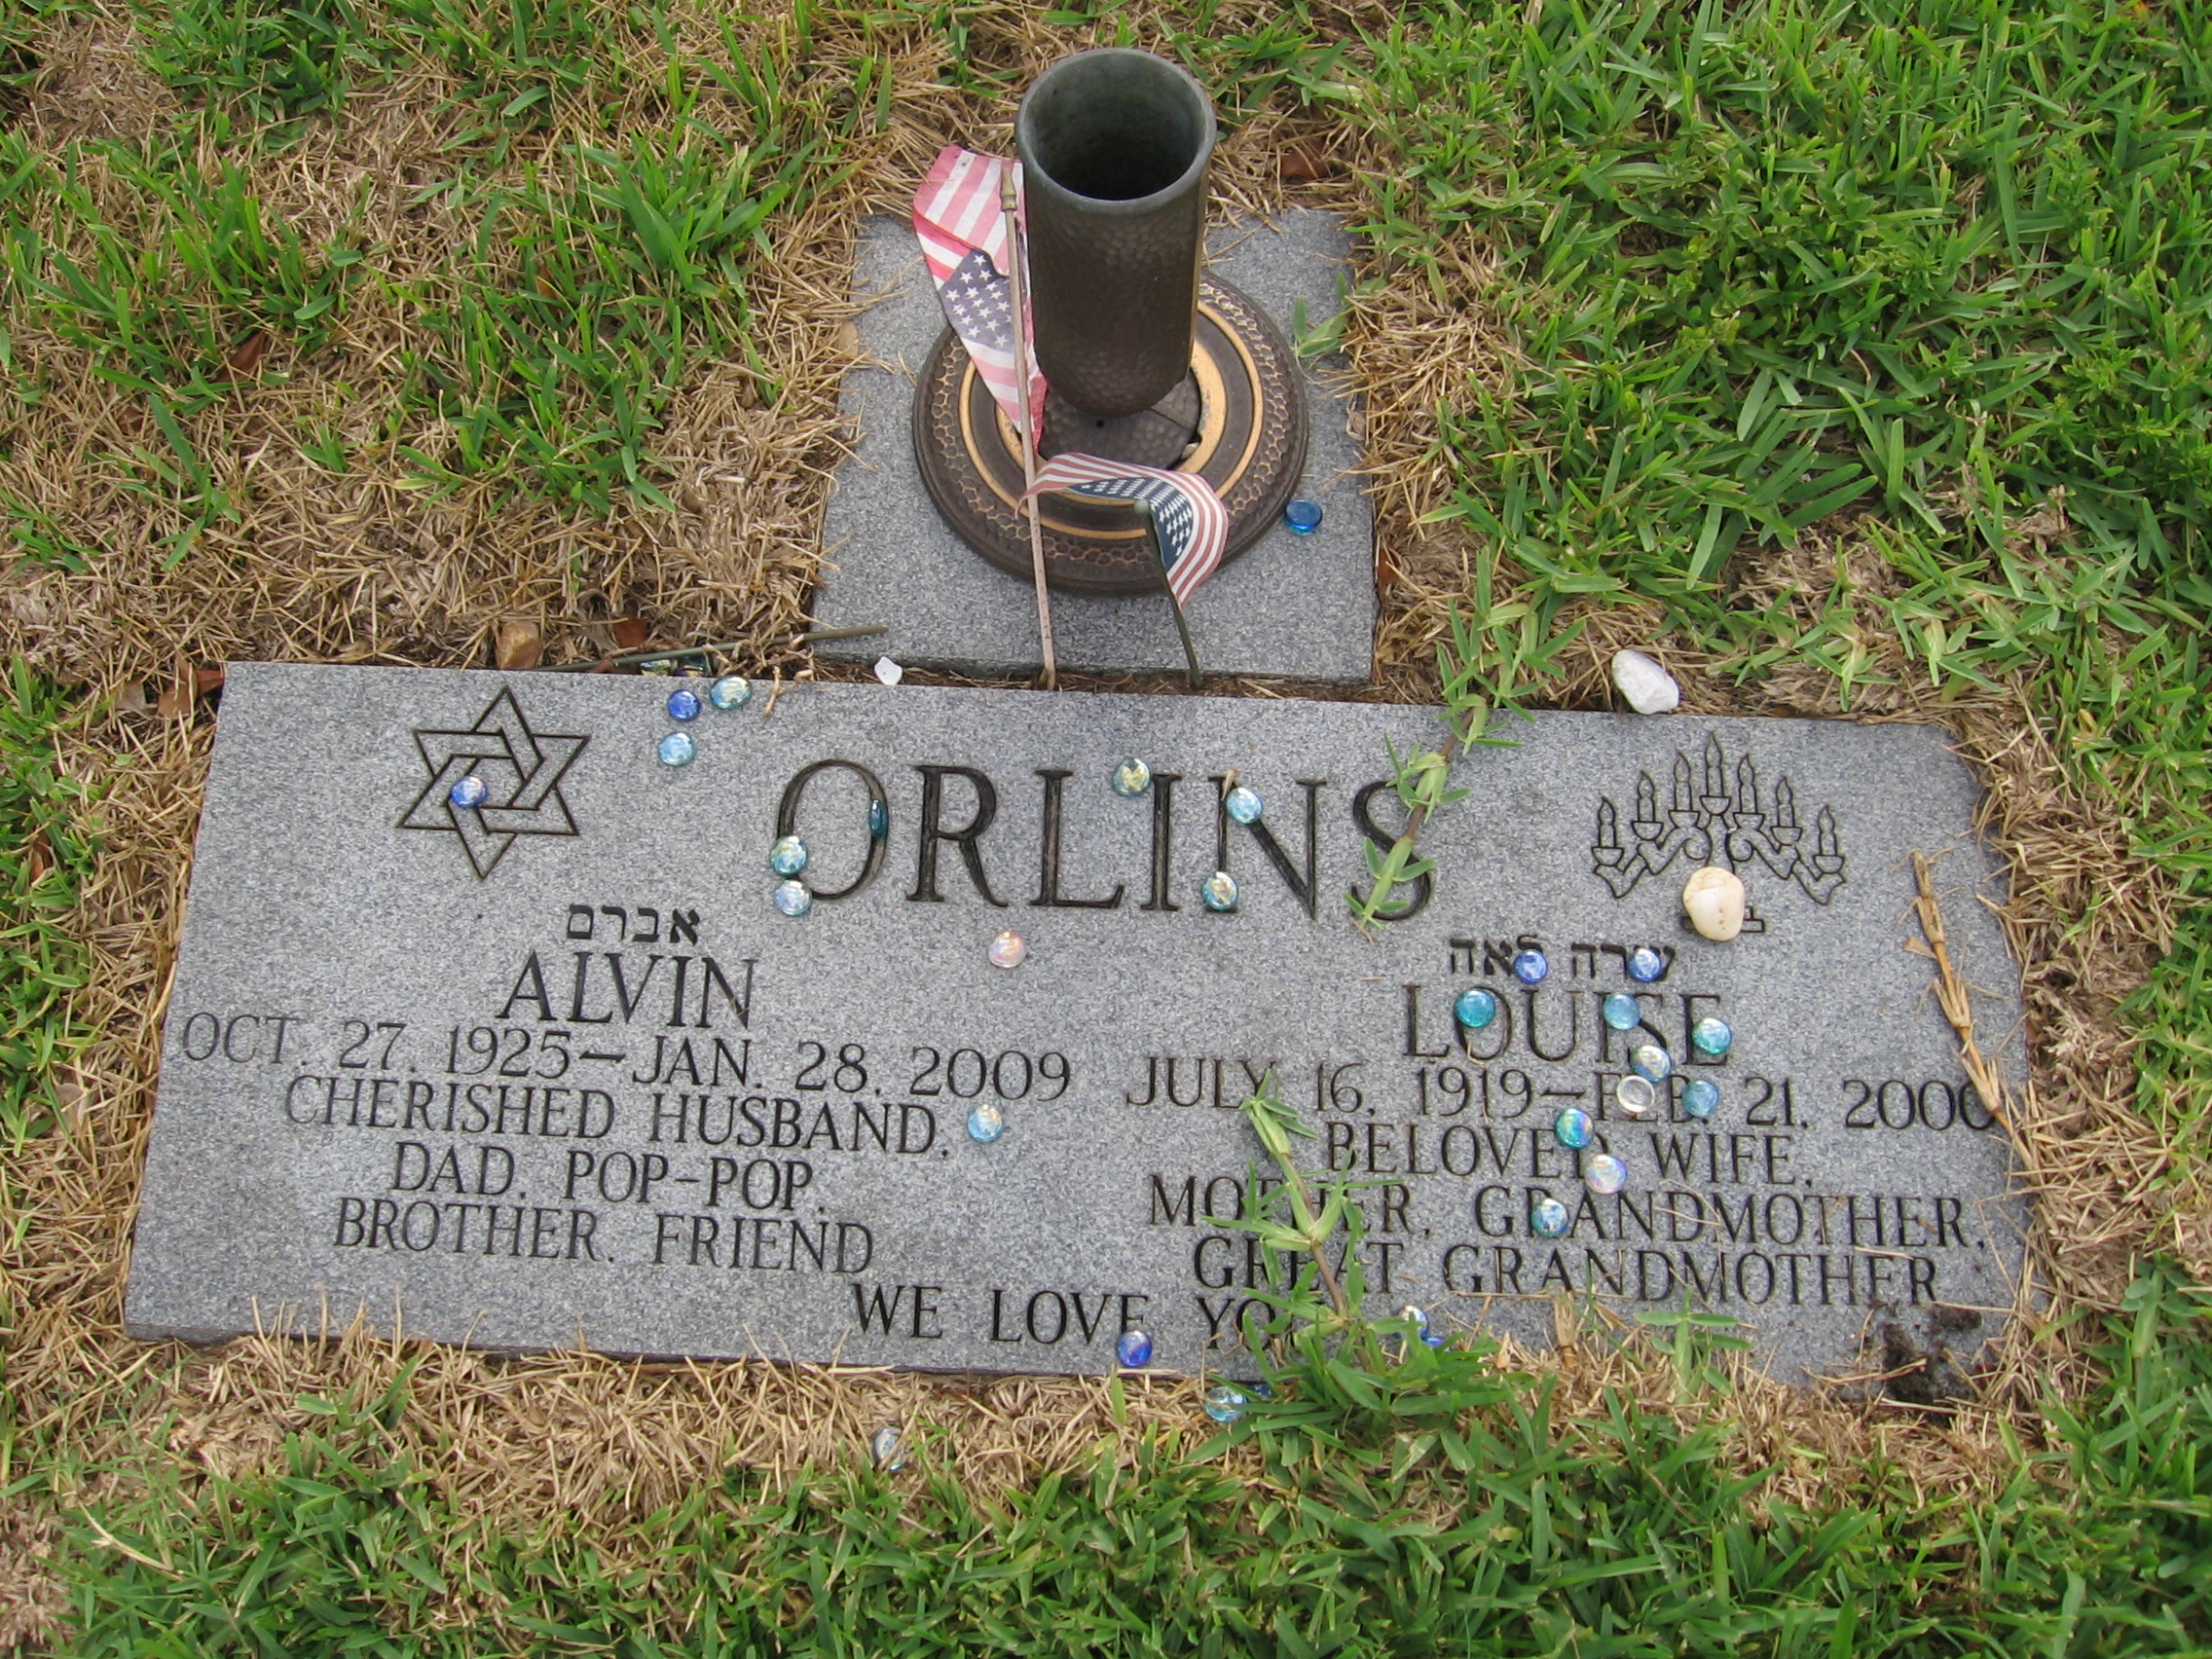 Alvin Orlins